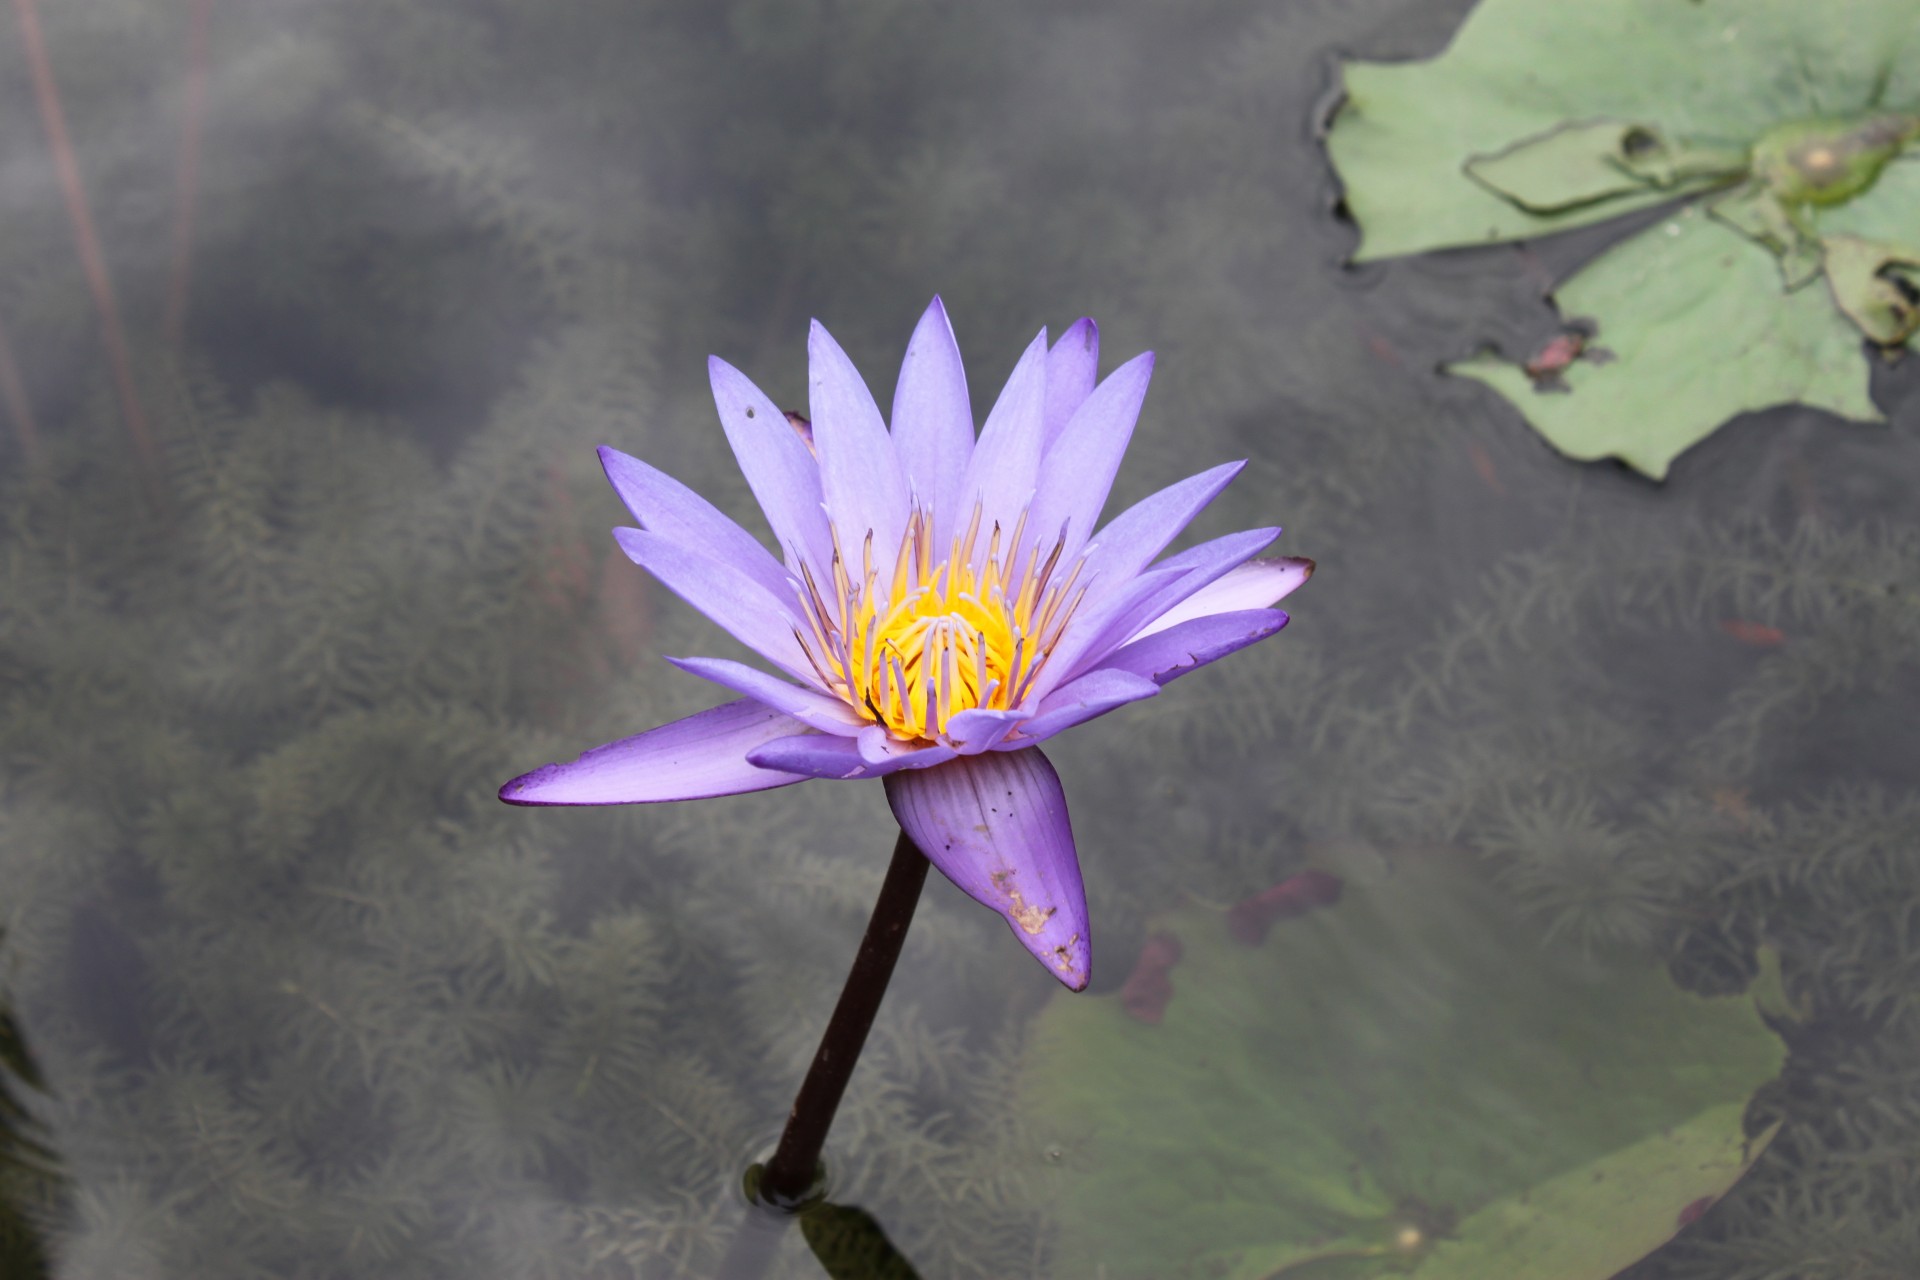 Blue Lotus Flower On The Pond